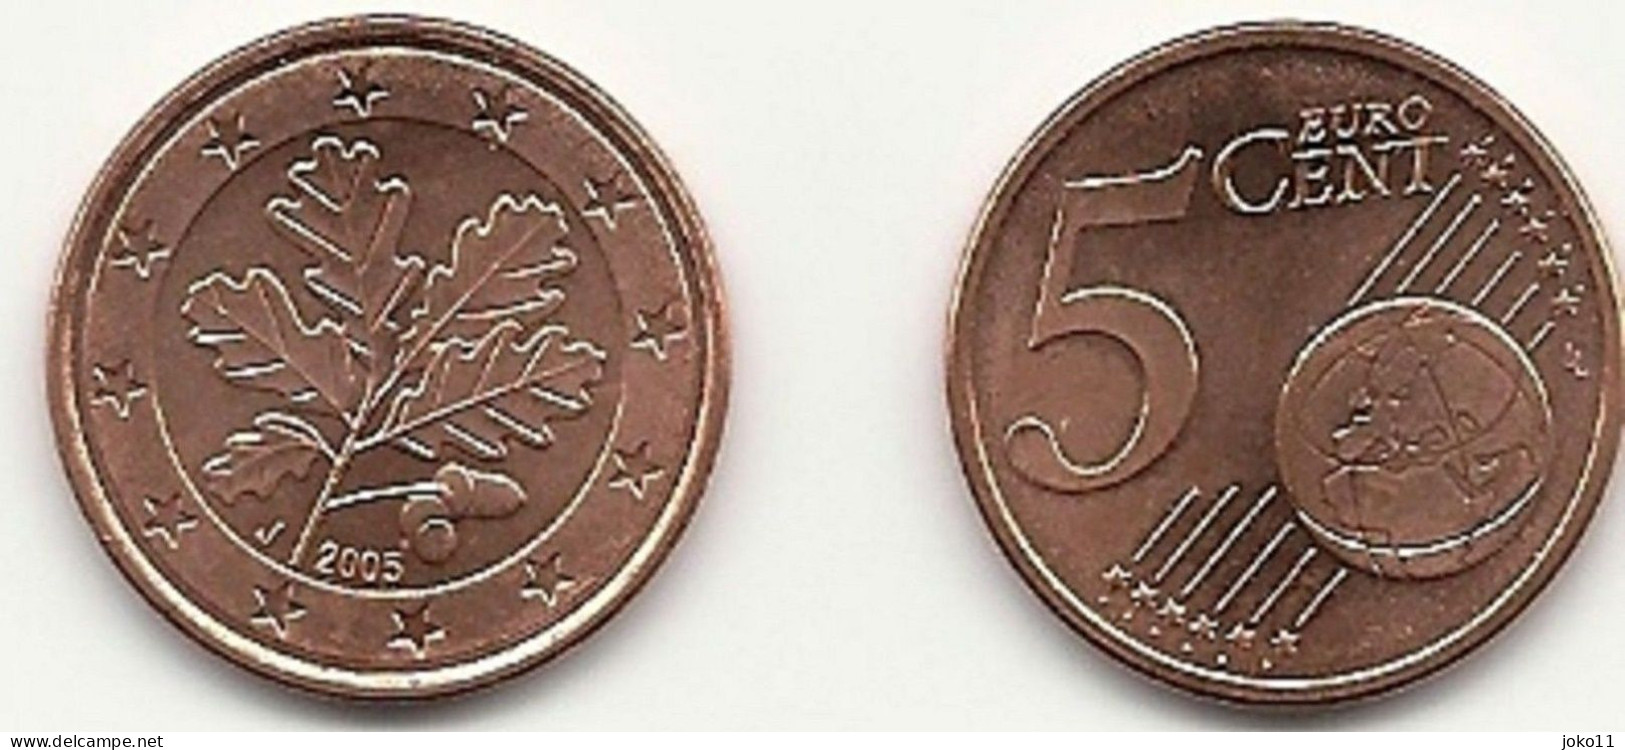 5 Cent, 2005 Prägestätte (J) Vz, Sehr Gut Erhaltene Umlaufmünze - Duitsland